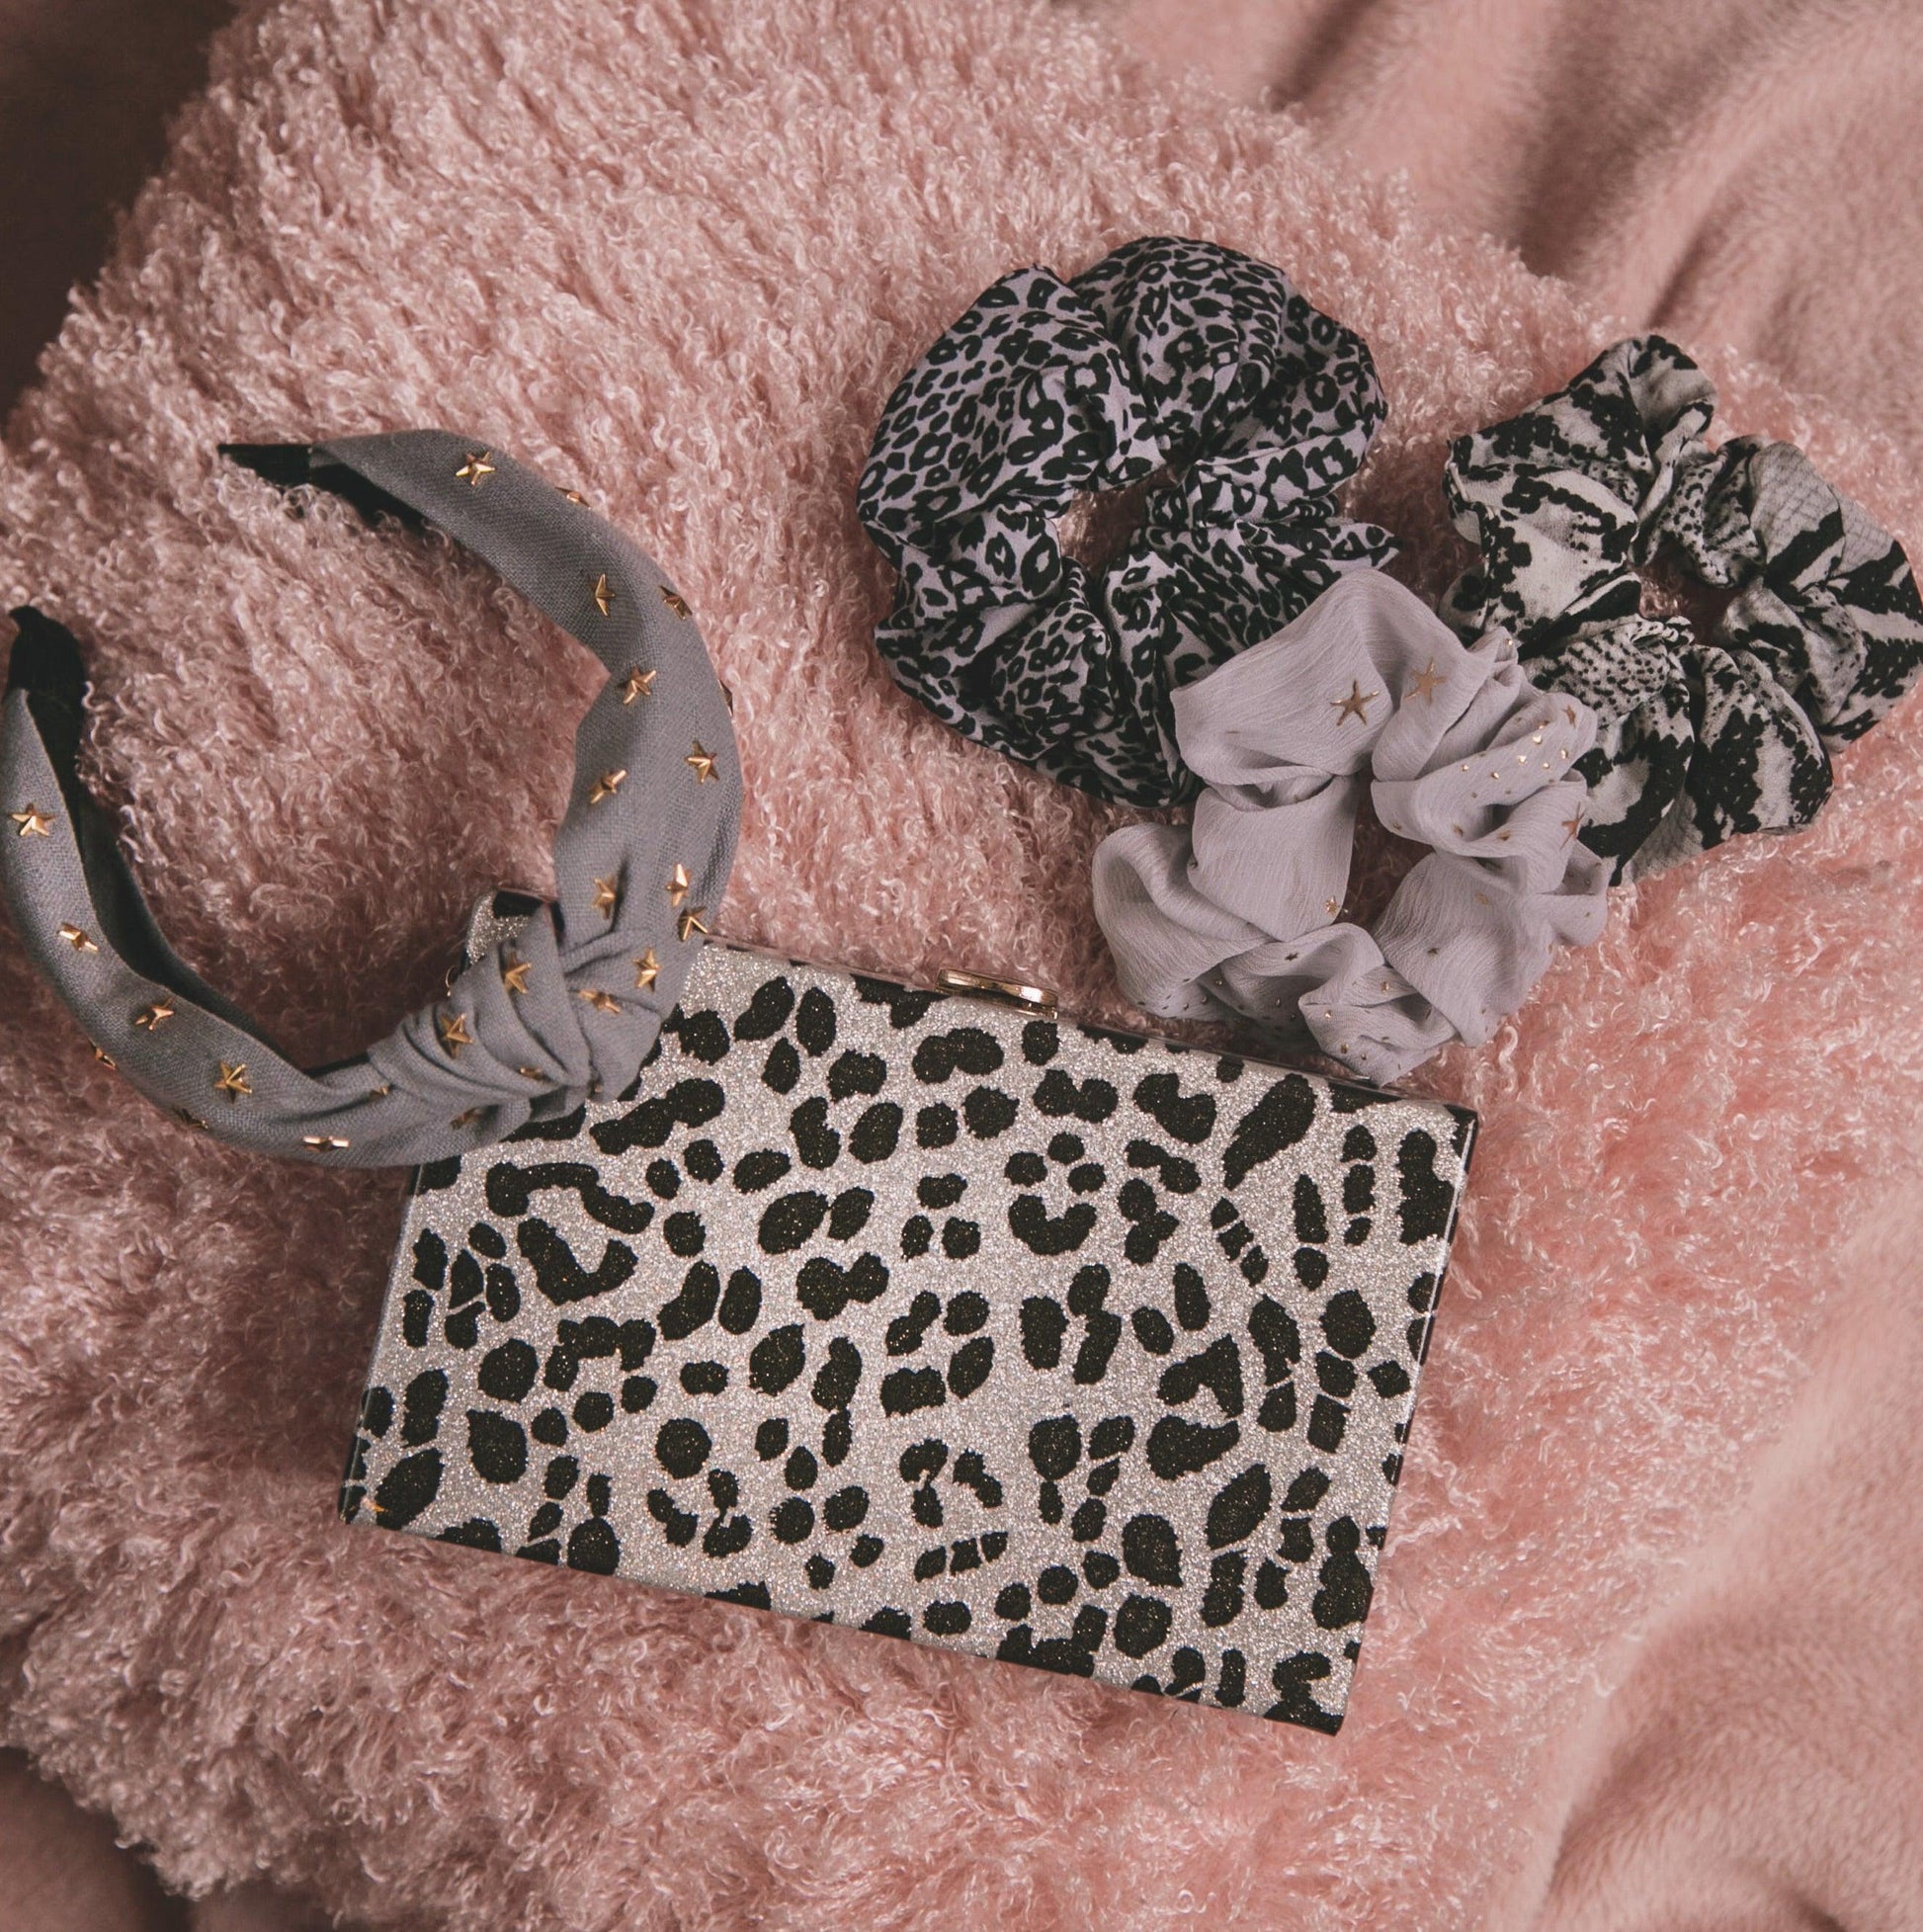 Behati Leopard Print Scrunchie - Grey - Luna Charles | animal, hair accessories, leopard, scrunchie | 